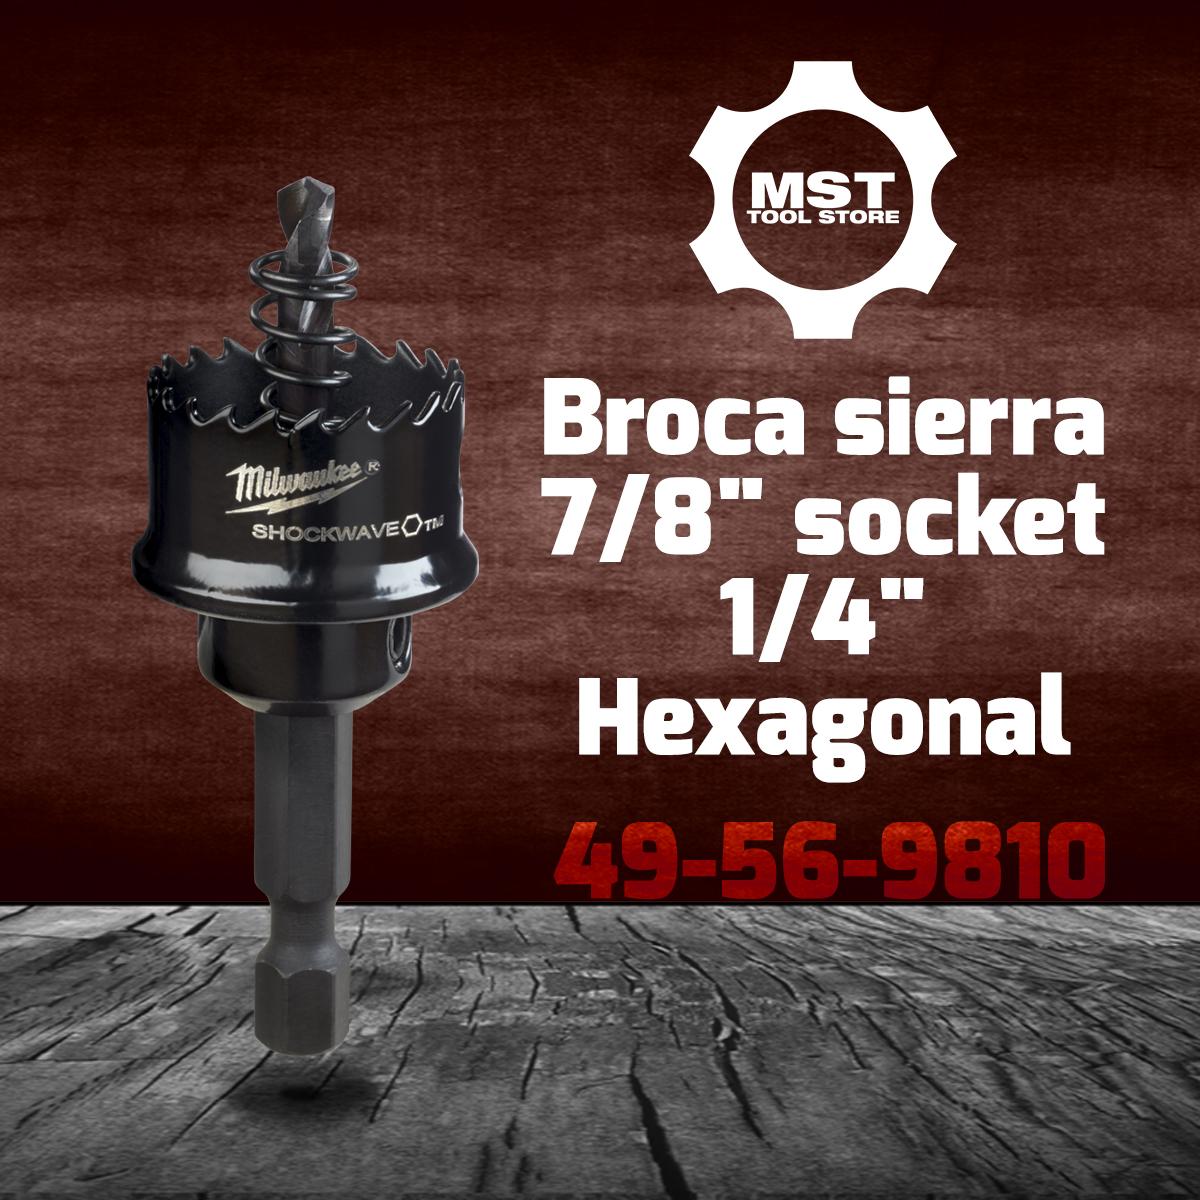 MILWAUKEE 49-56-9810 Broca sierra 7/8" socket 1/4" hexagonal